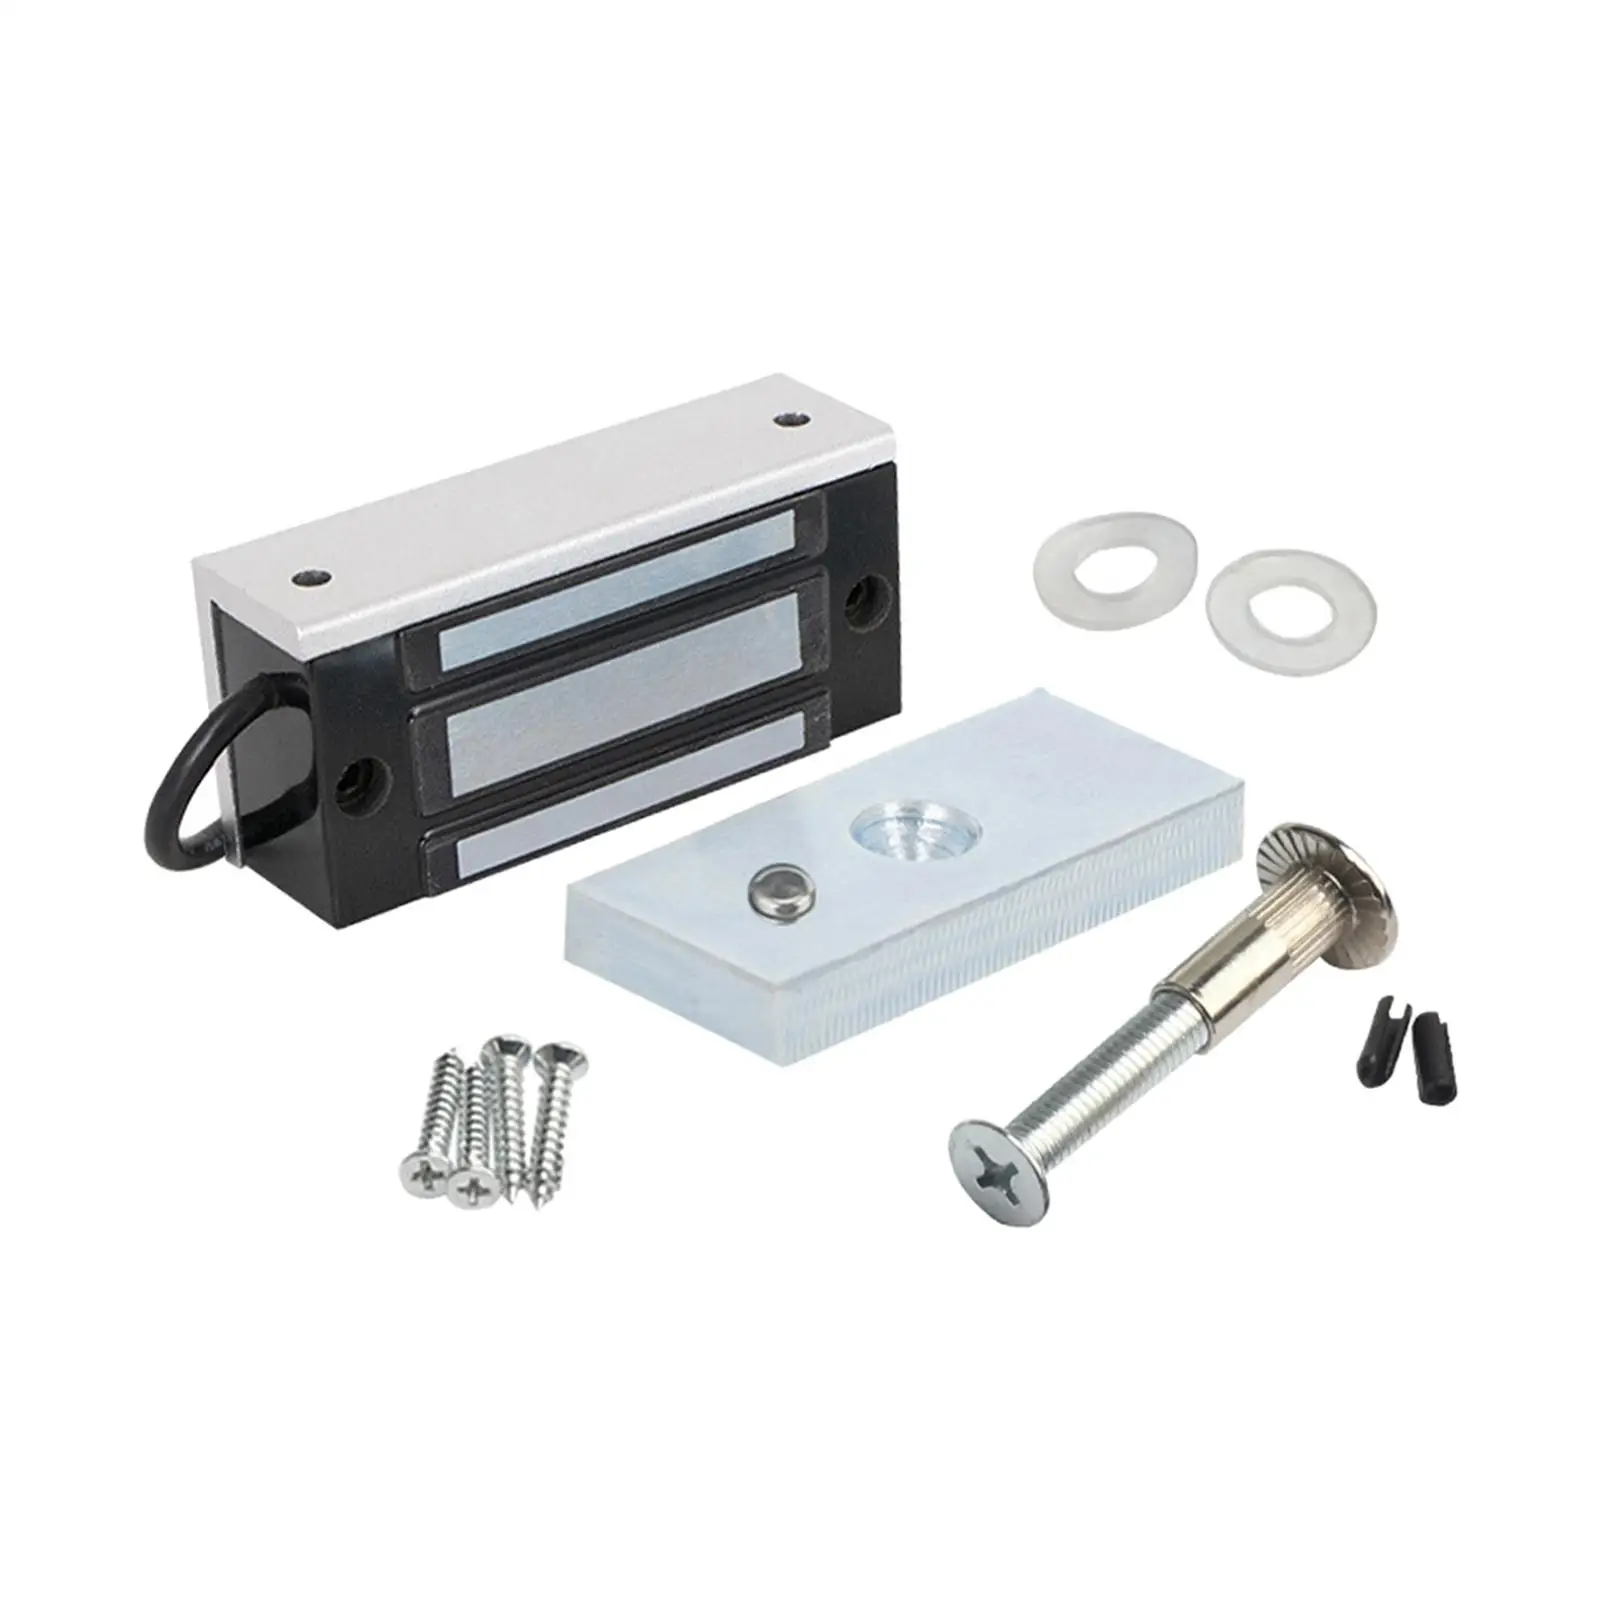 12V Electromagnetic Lock Mini Em Locks Electric Magnetic Lock for Cabinet Wooden Door Drawer Home Security System Glass Door